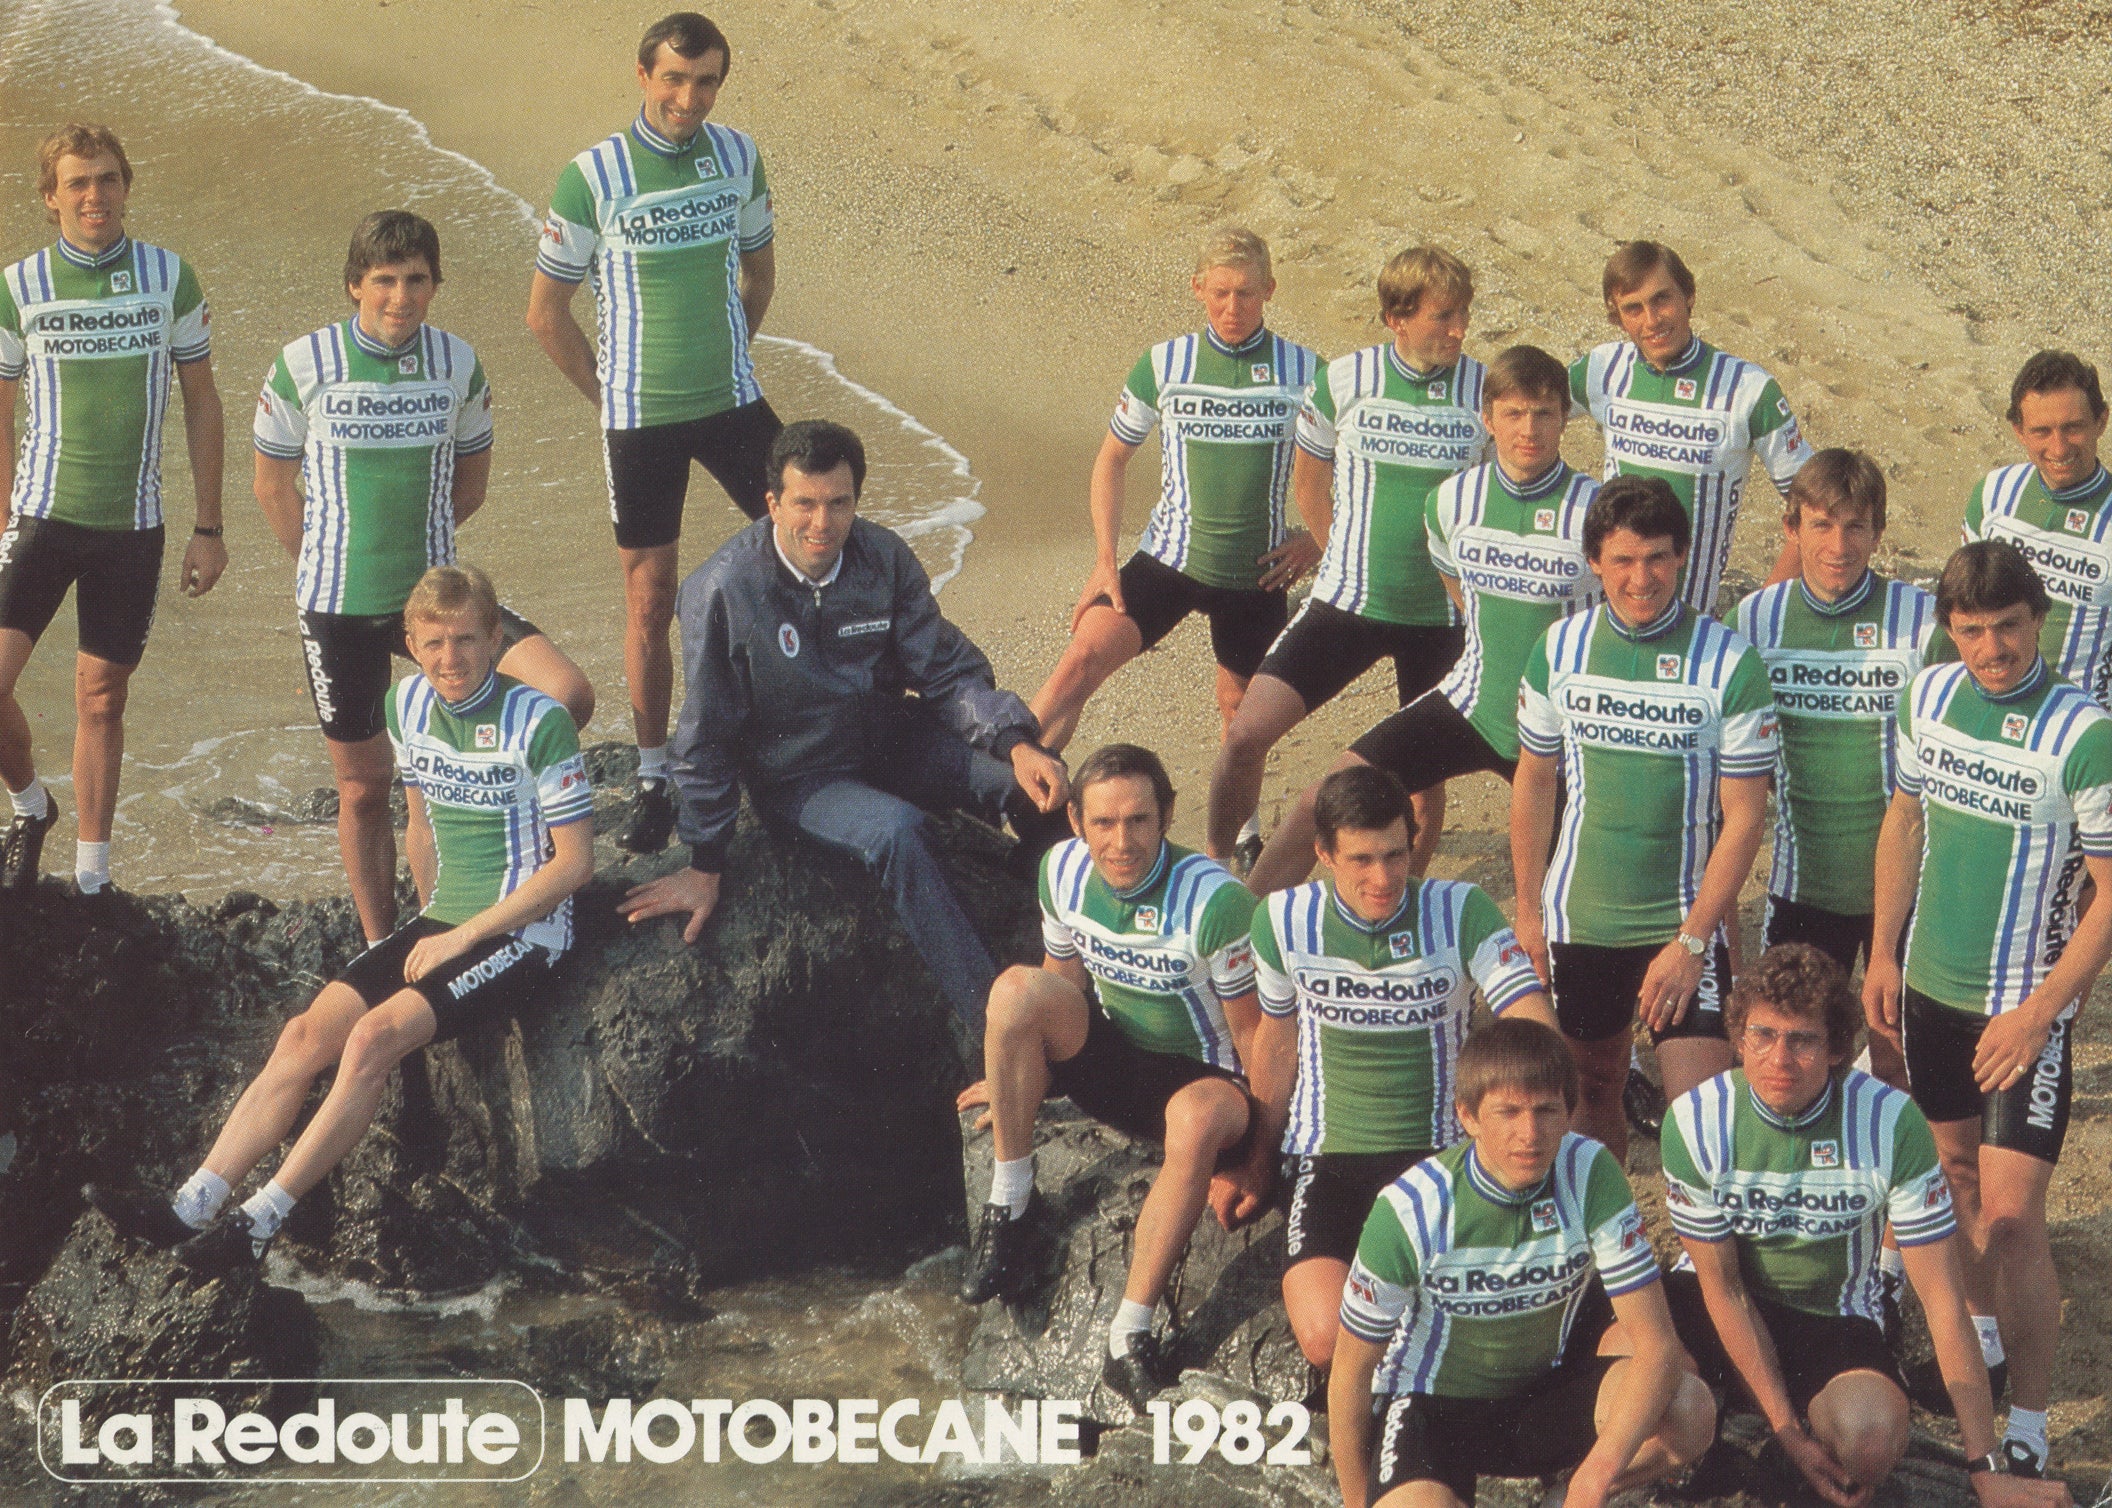 1982 La Redoute team postcard